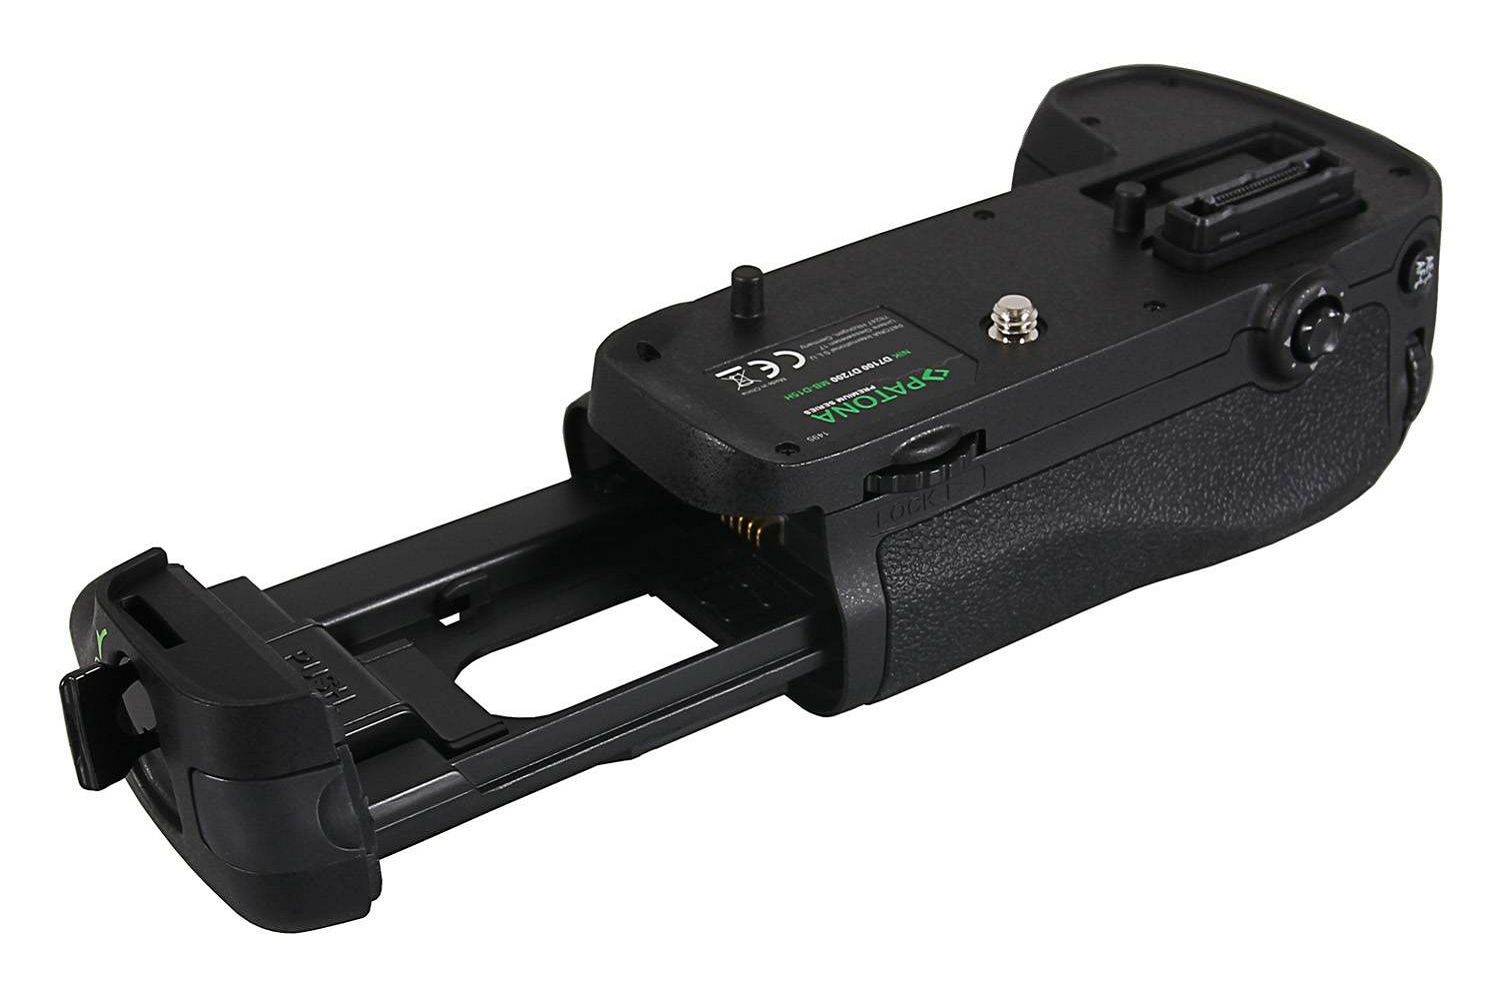 Patona Premium Držač baterija za Nikon D7100 D7200 MB-D15H Battery Grip for 1x EN-EL15 batterie incl. IR wireless control